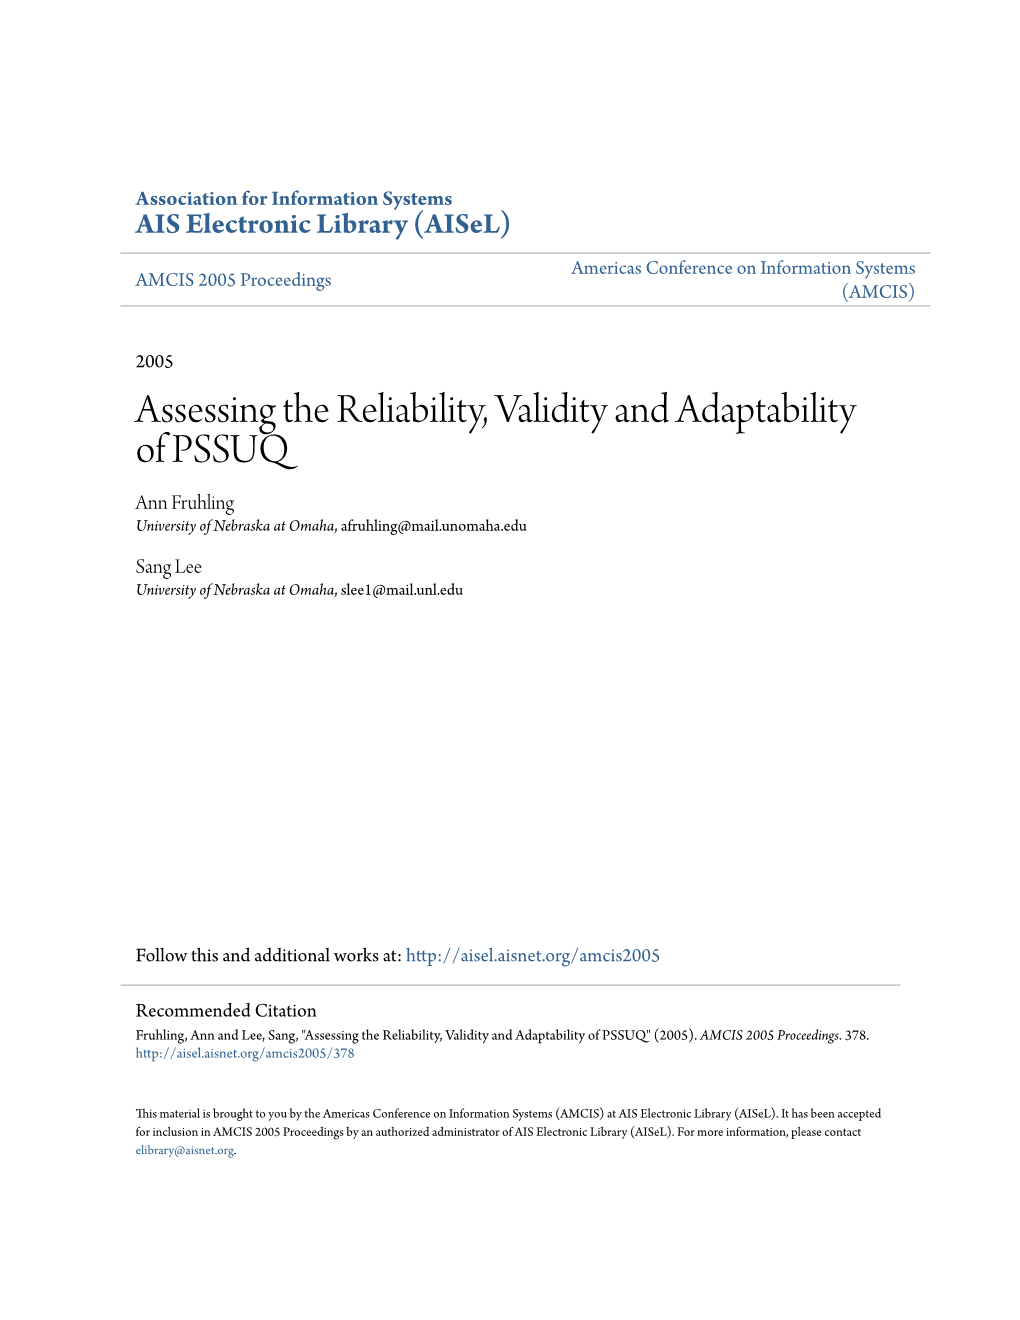 Assessing the Reliability, Validity and Adaptability of PSSUQ Ann Fruhling University of Nebraska at Omaha, Afruhling@Mail.Unomaha.Edu